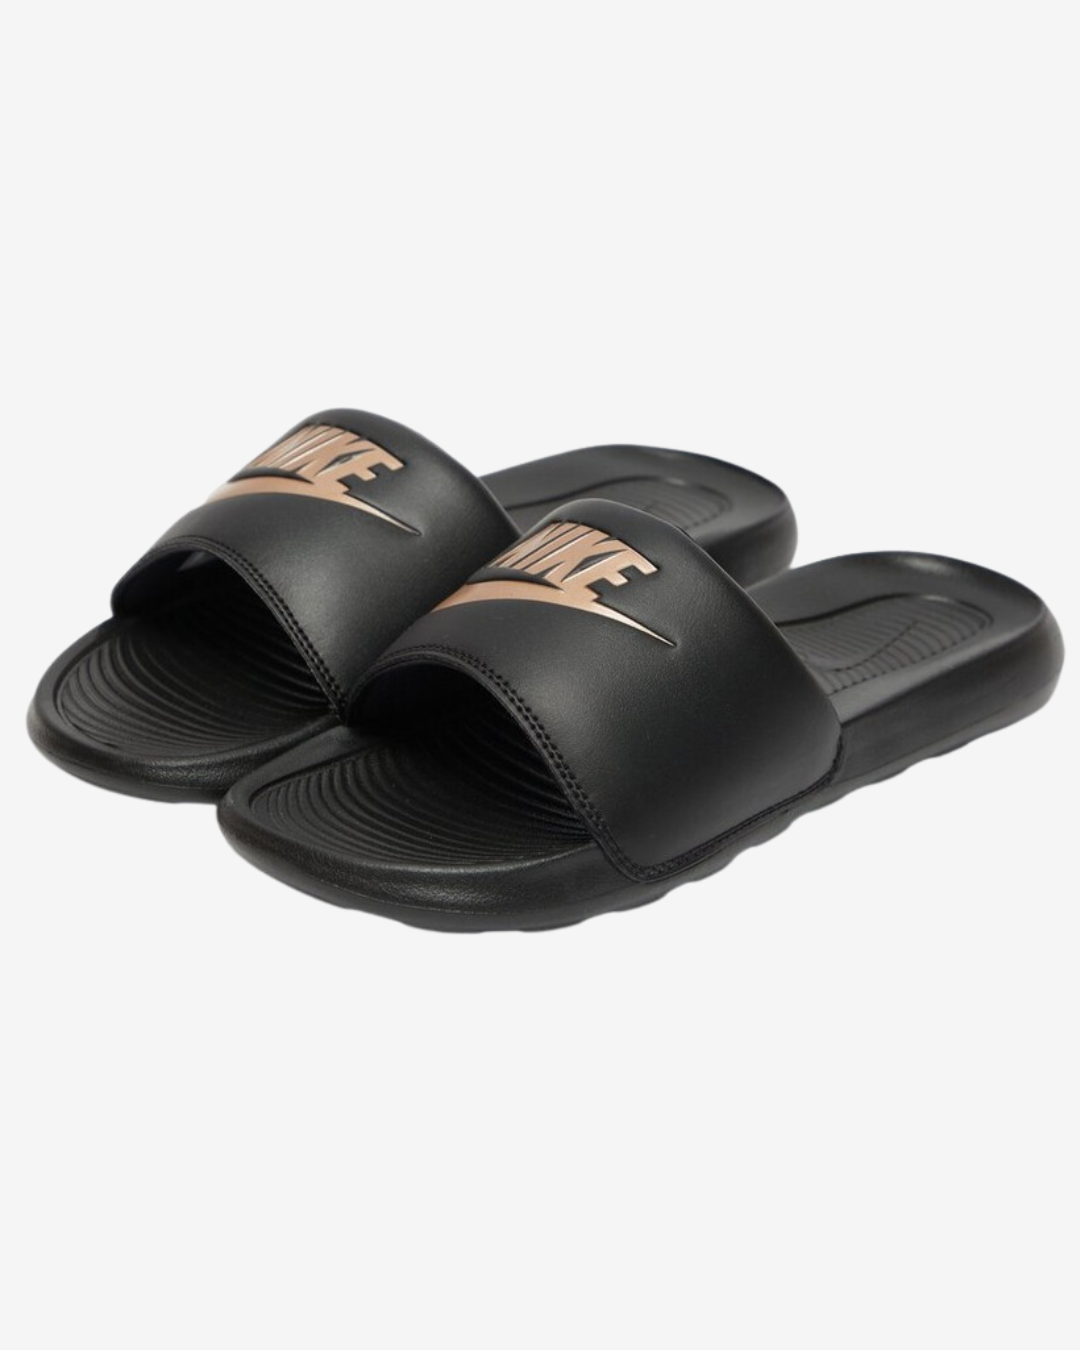 Se Nike Victori slippers - Sort / Bronze - Str. 40.5 - Modish.dk hos Modish.dk